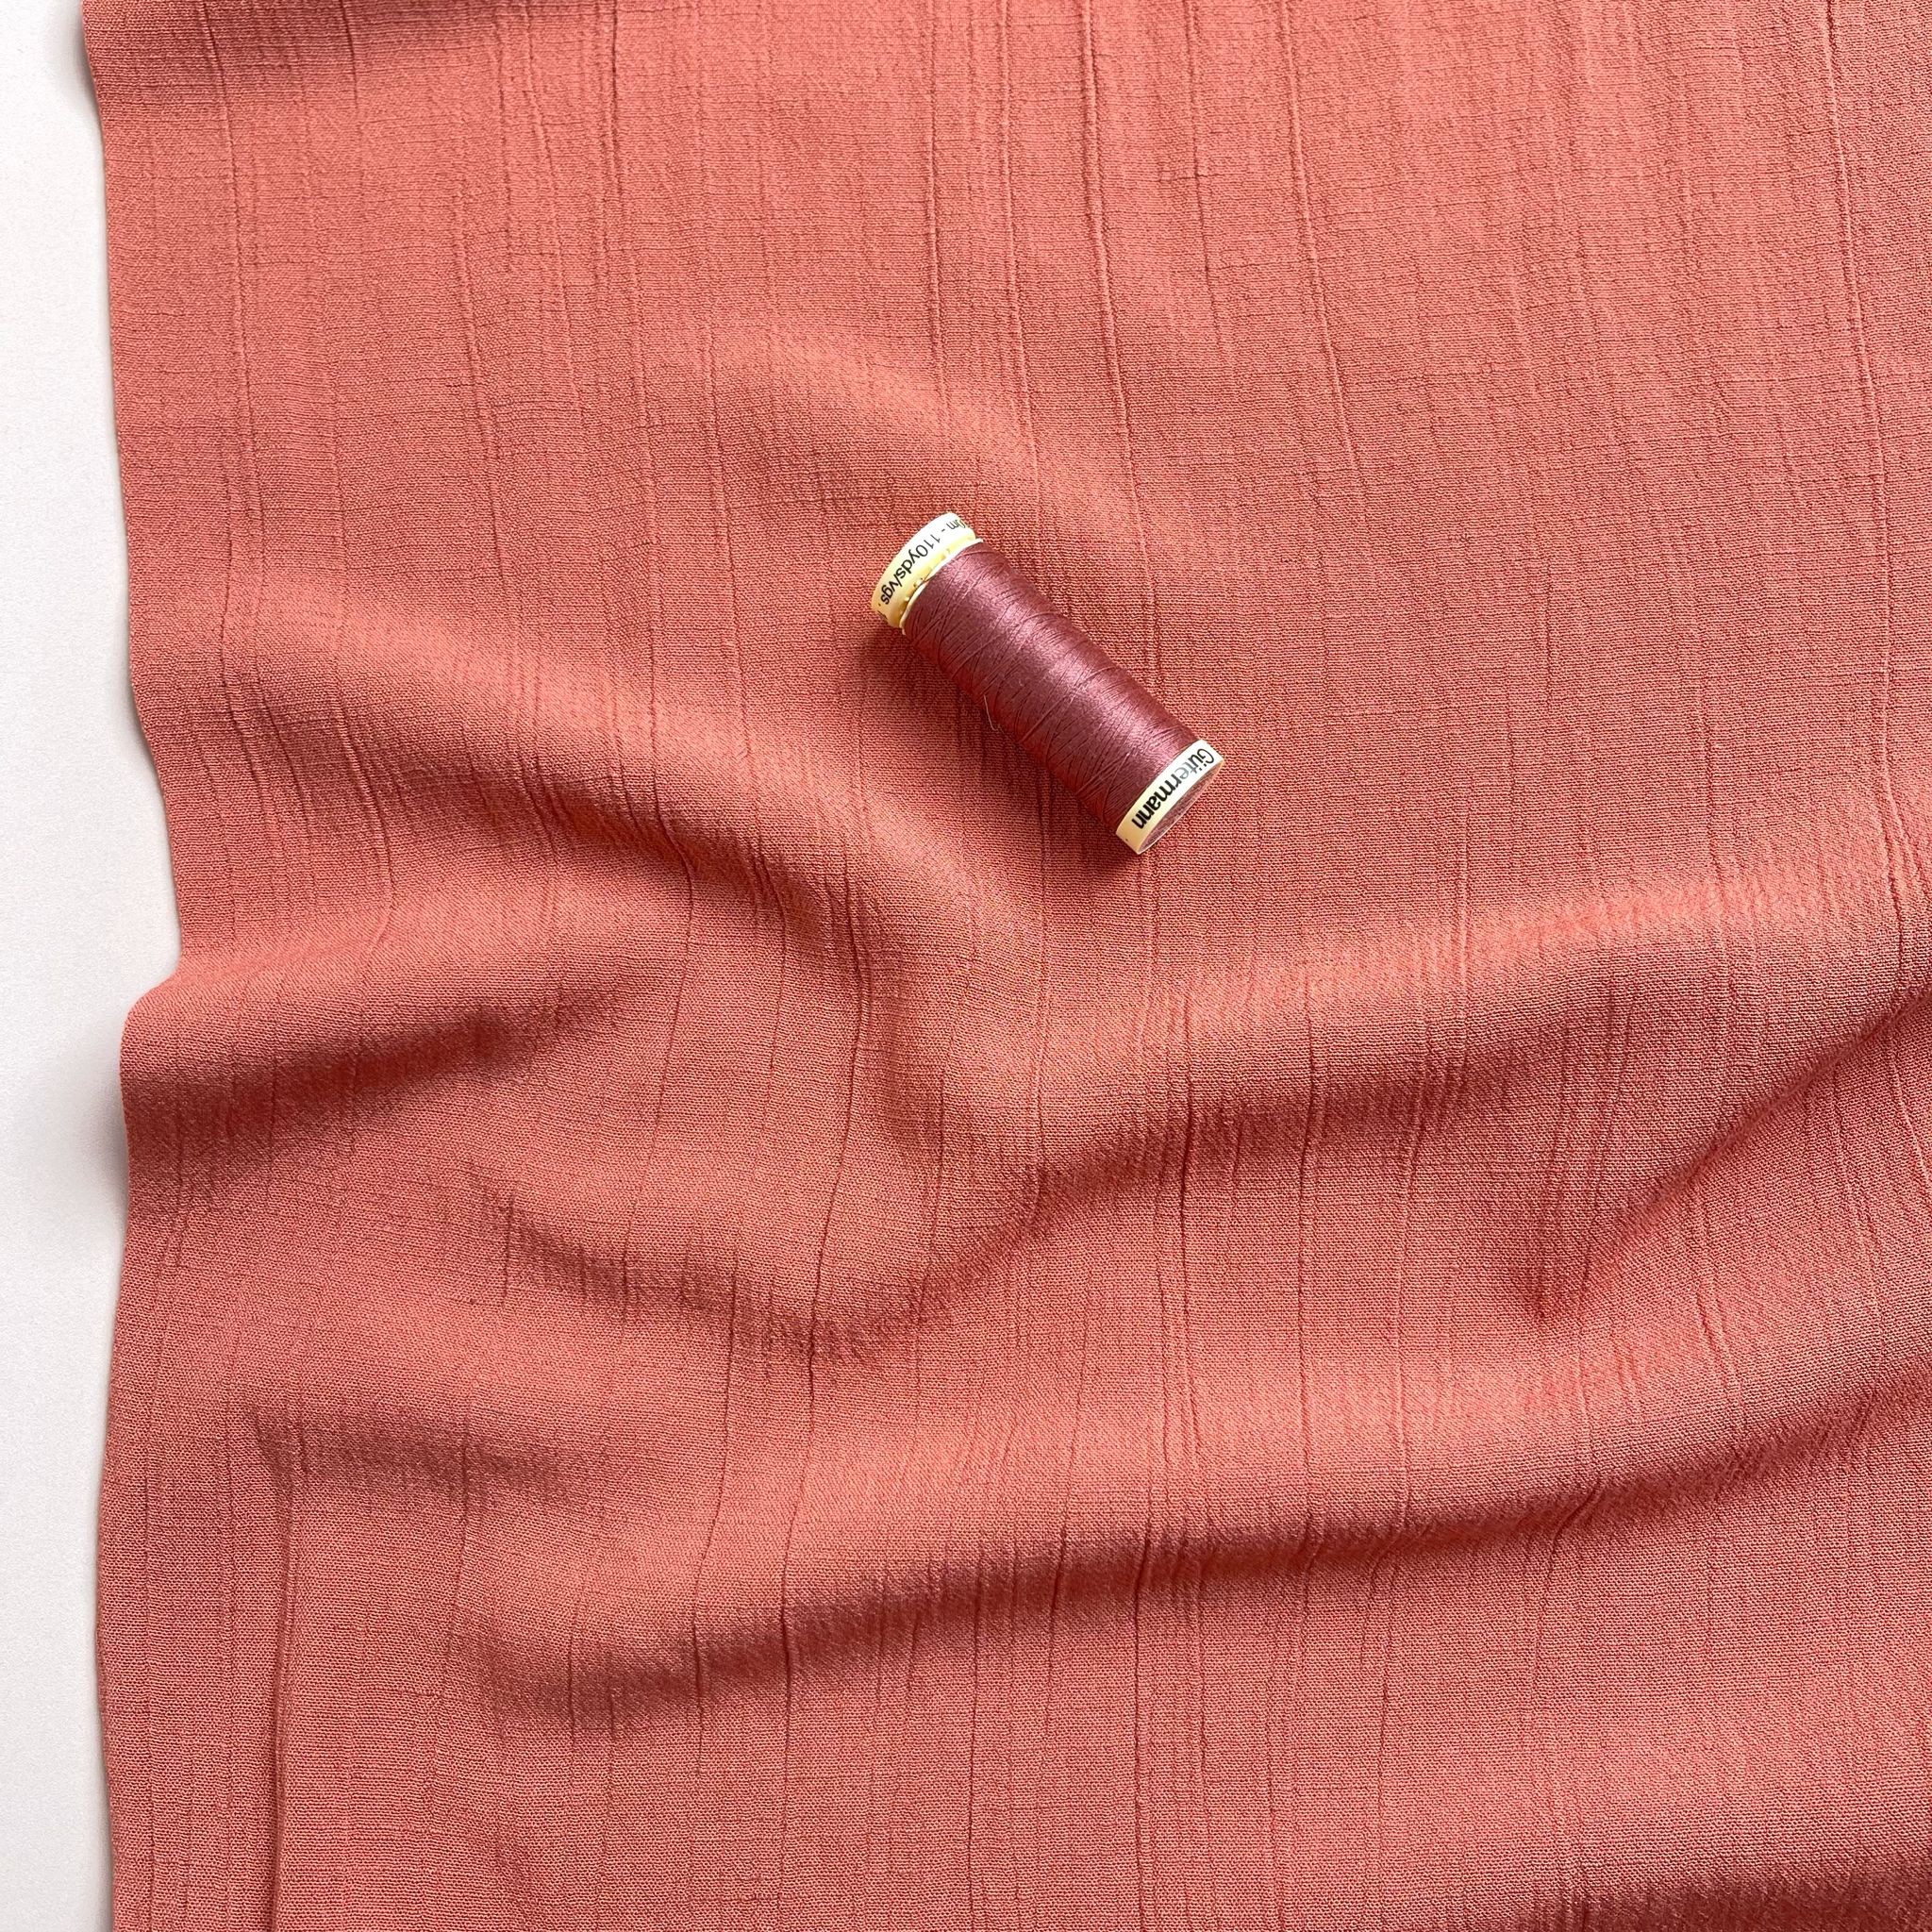 REMNANT 3.54 Metres - Crinkle Viscose Linen Blend Fabric in Terracotta Orange